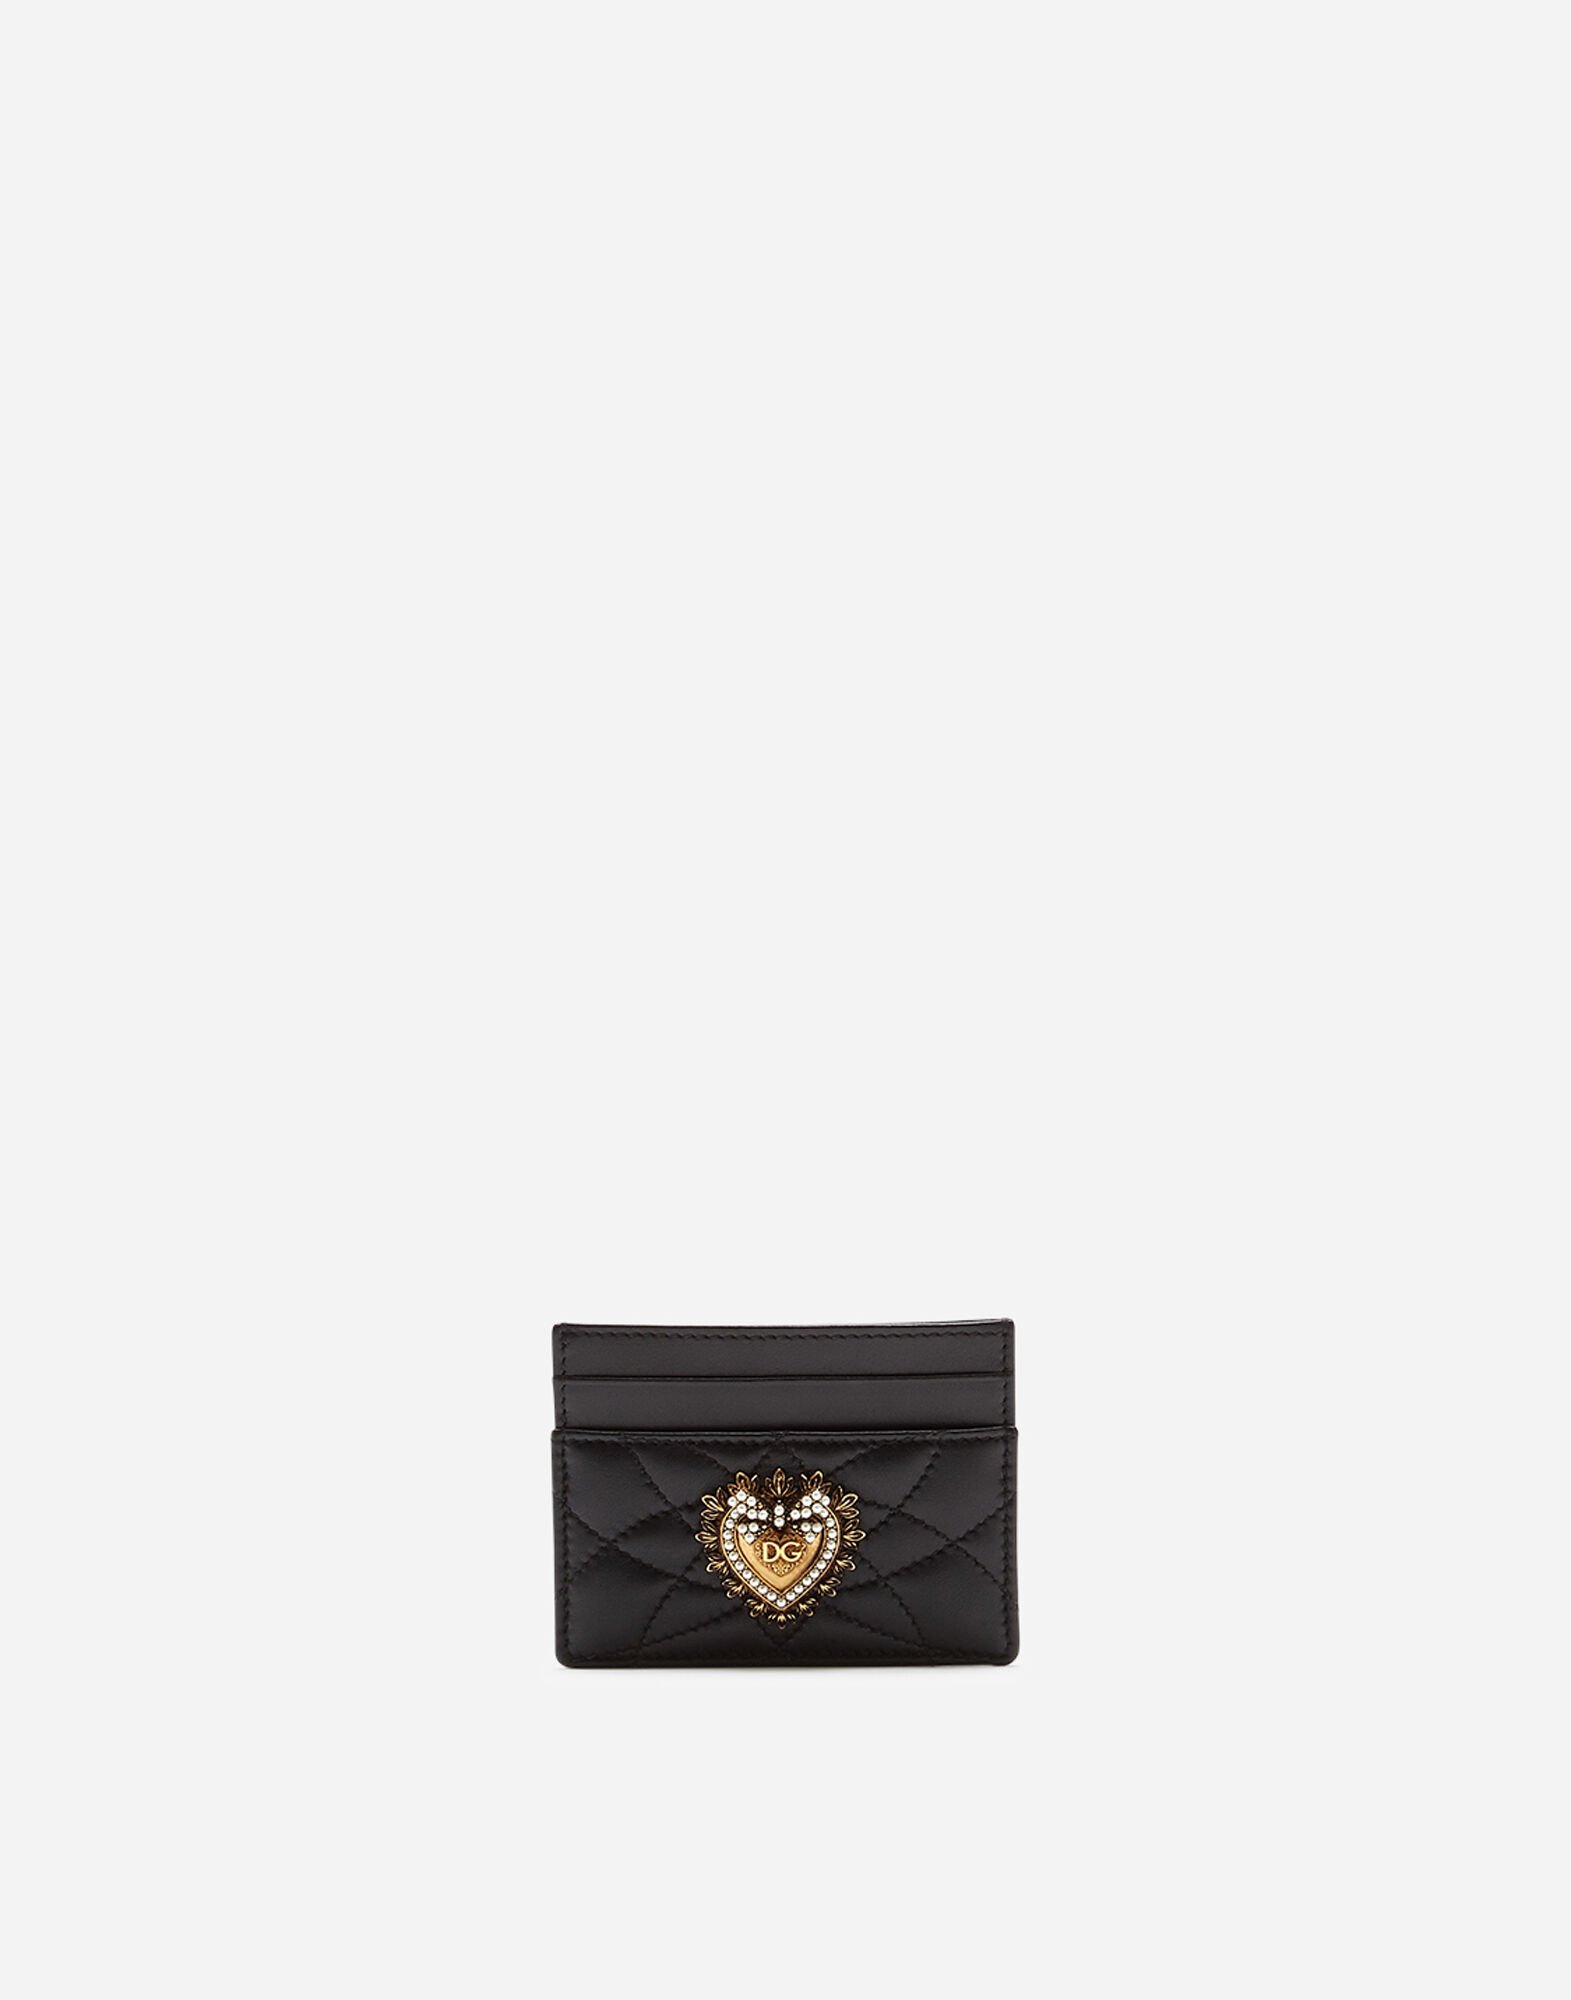 Dolce & Gabbana Devotion credit card holder Black BI0770A1001